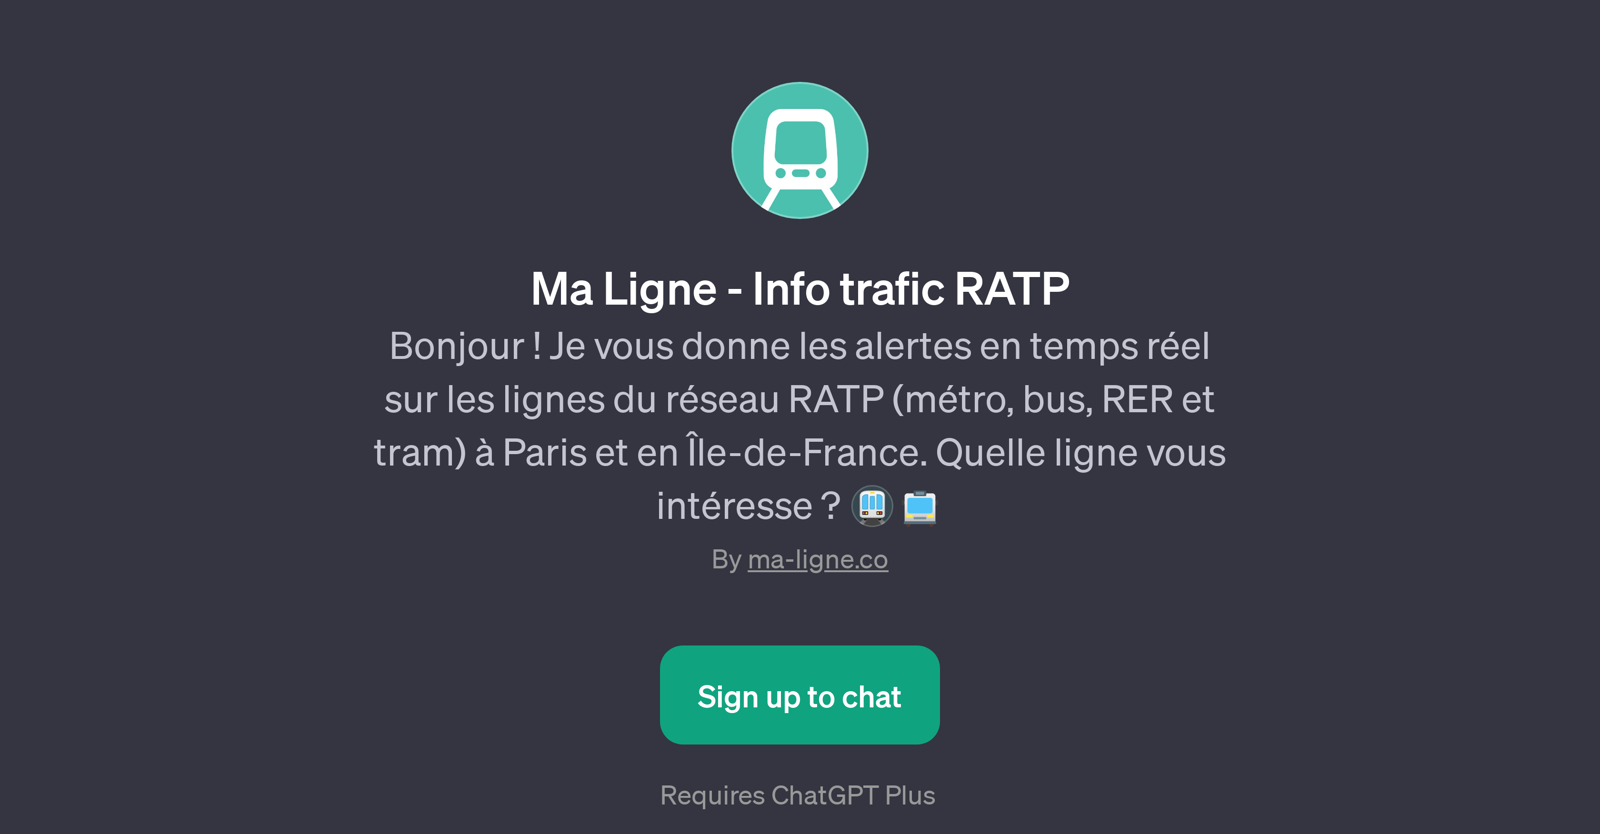 Ma Ligne - Info trafic RATP website